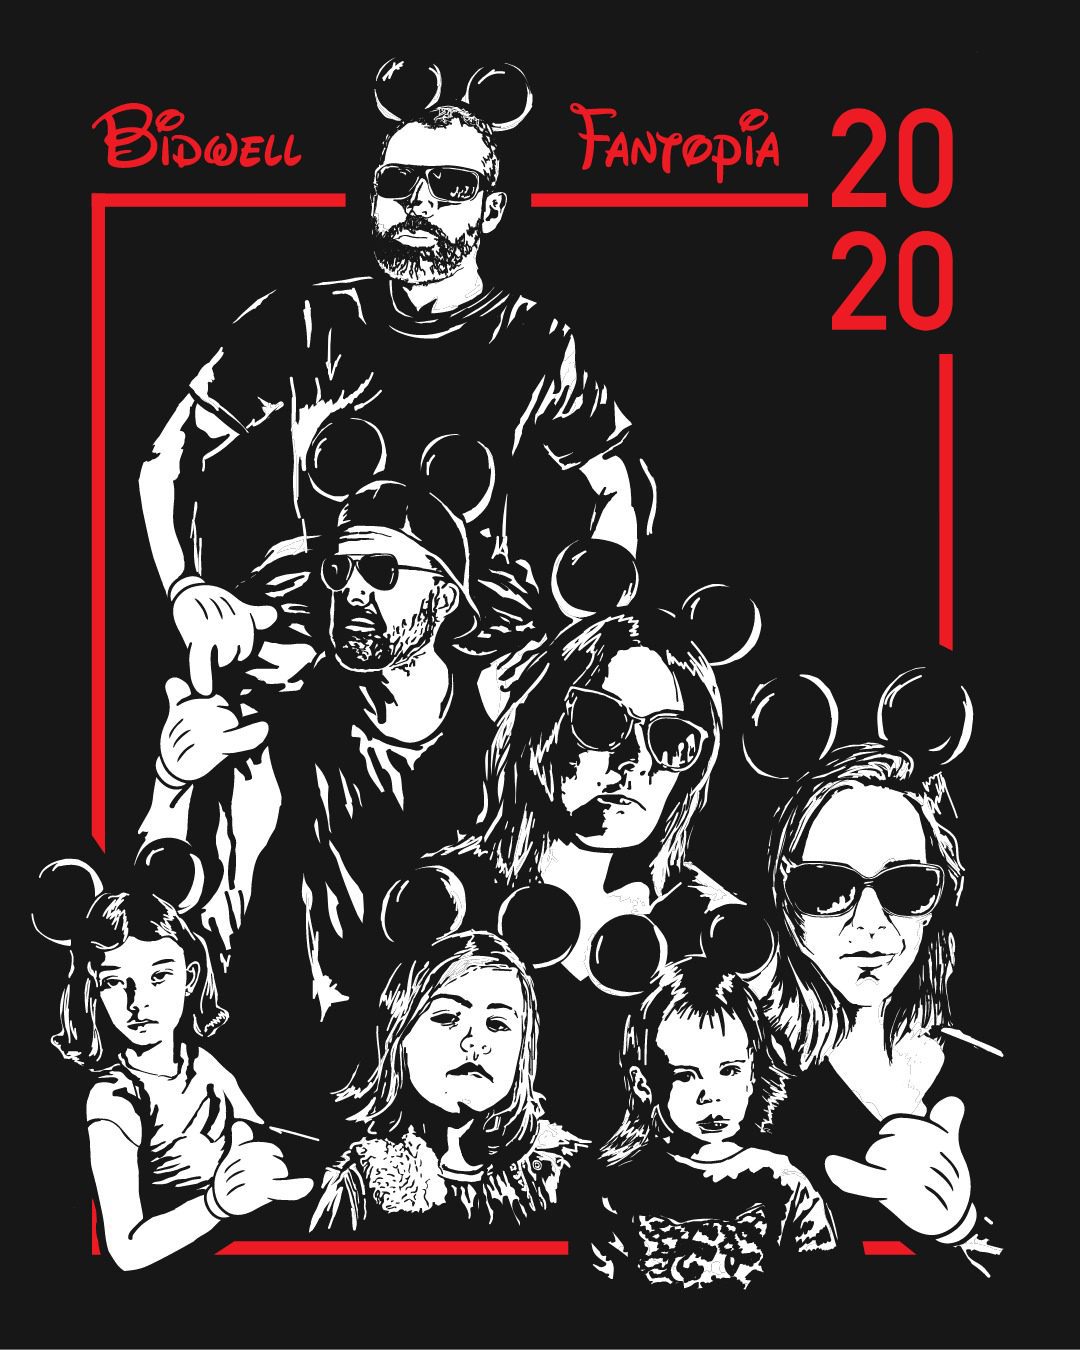 Bidwell Fantopia 2020 T-shirt Design